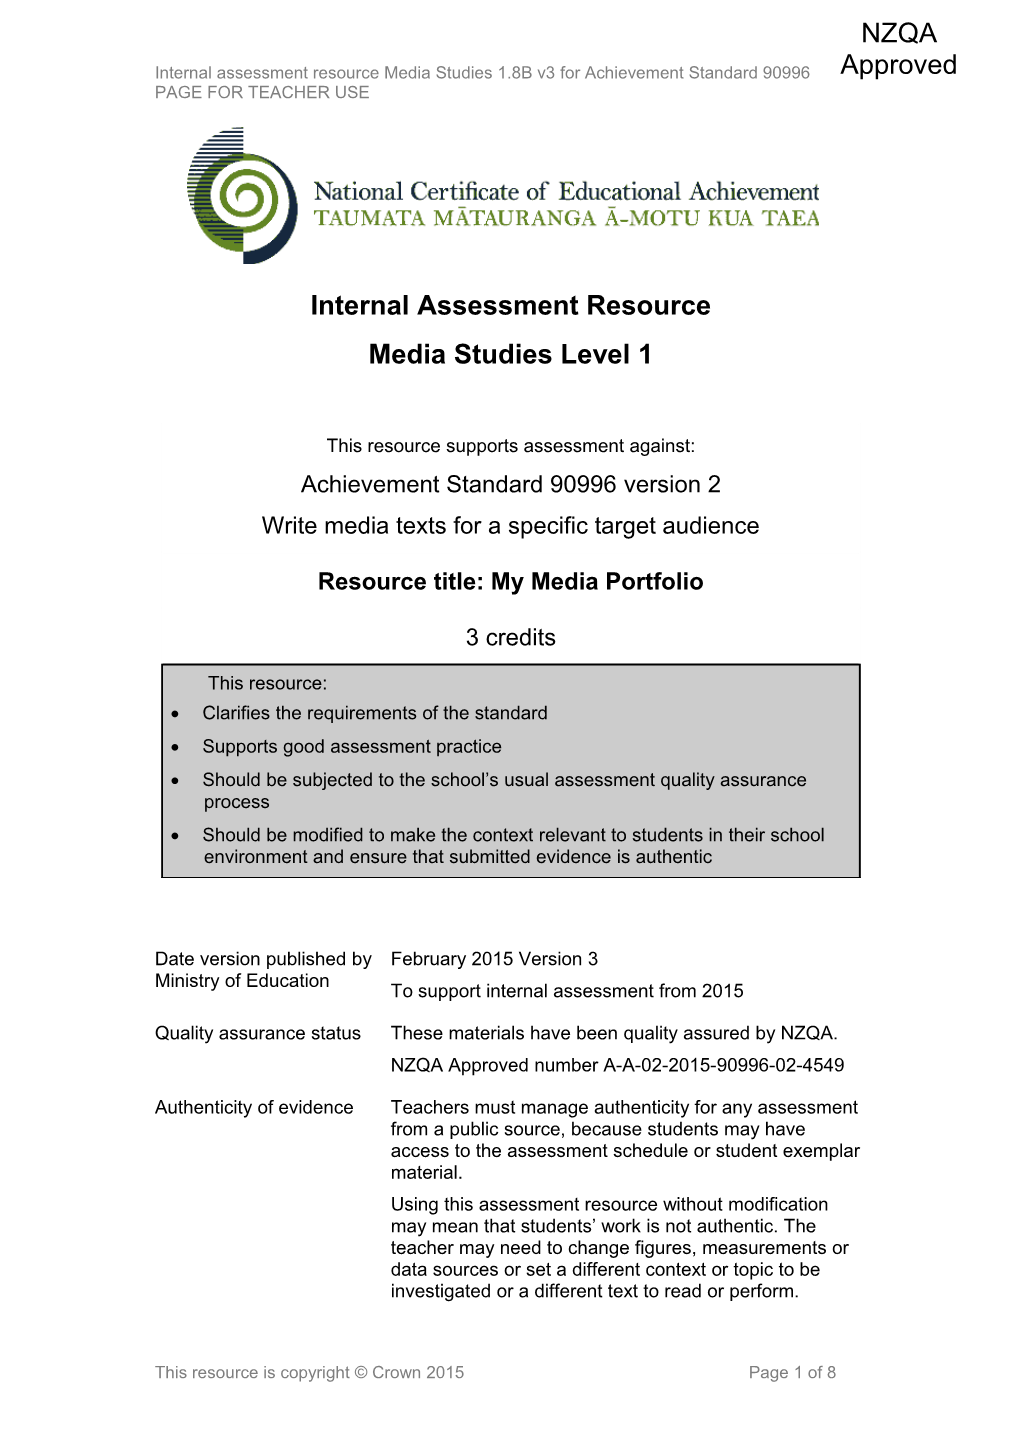 Level 1 Media Studies Internal Assessment Resource